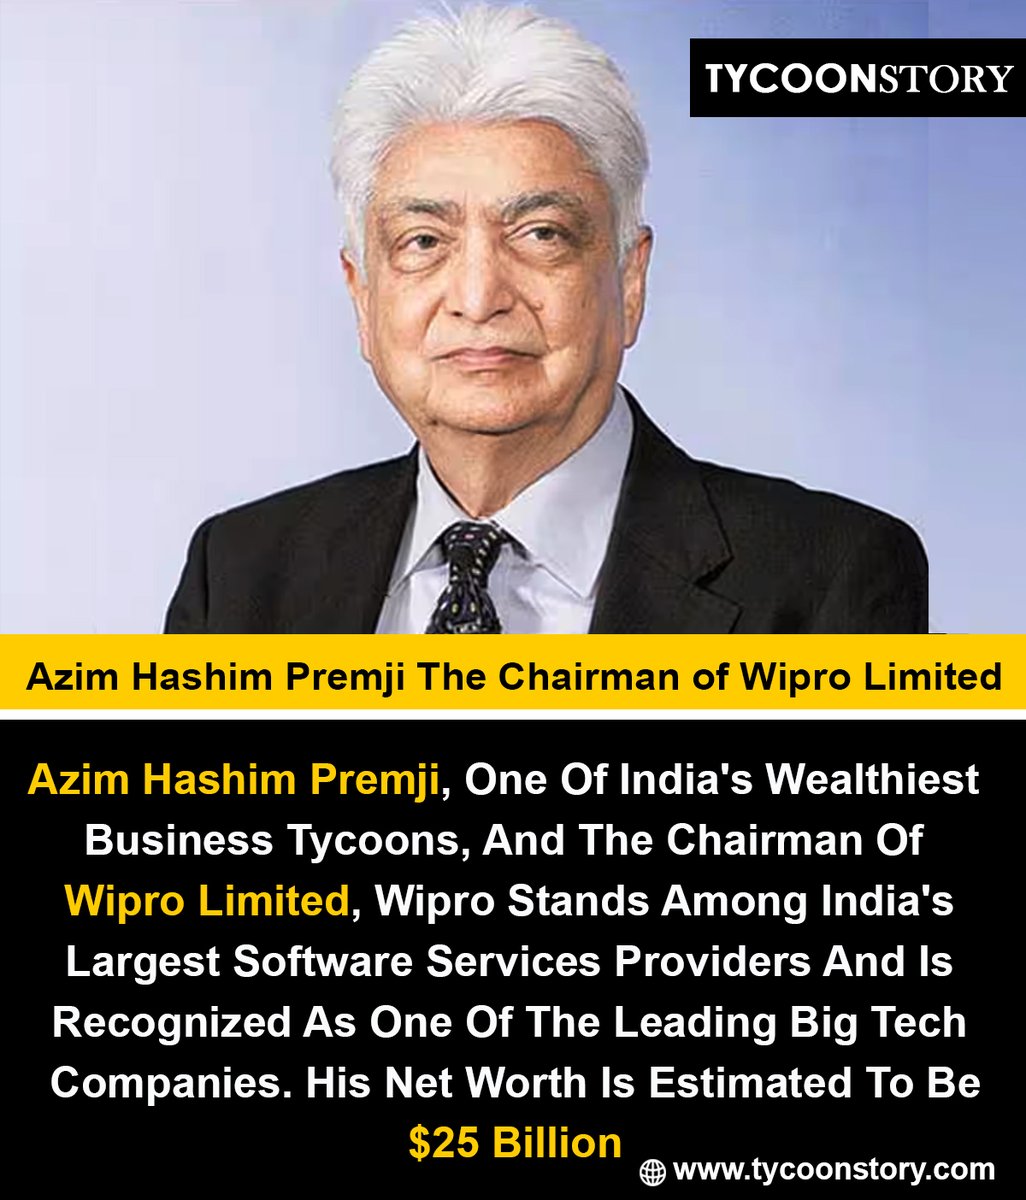 Azim Hashim Premji The Chairman of Wipro Limited

#AzimPremji #Wipro #Chairman #TechIndustry #Philanthropist #software #technology #BusinessVisionary #ITServices #CorporateLeader #IndianBusinessIcon #EducationForAll #PremjiFoundation @Wipro 

tycoonstory.com